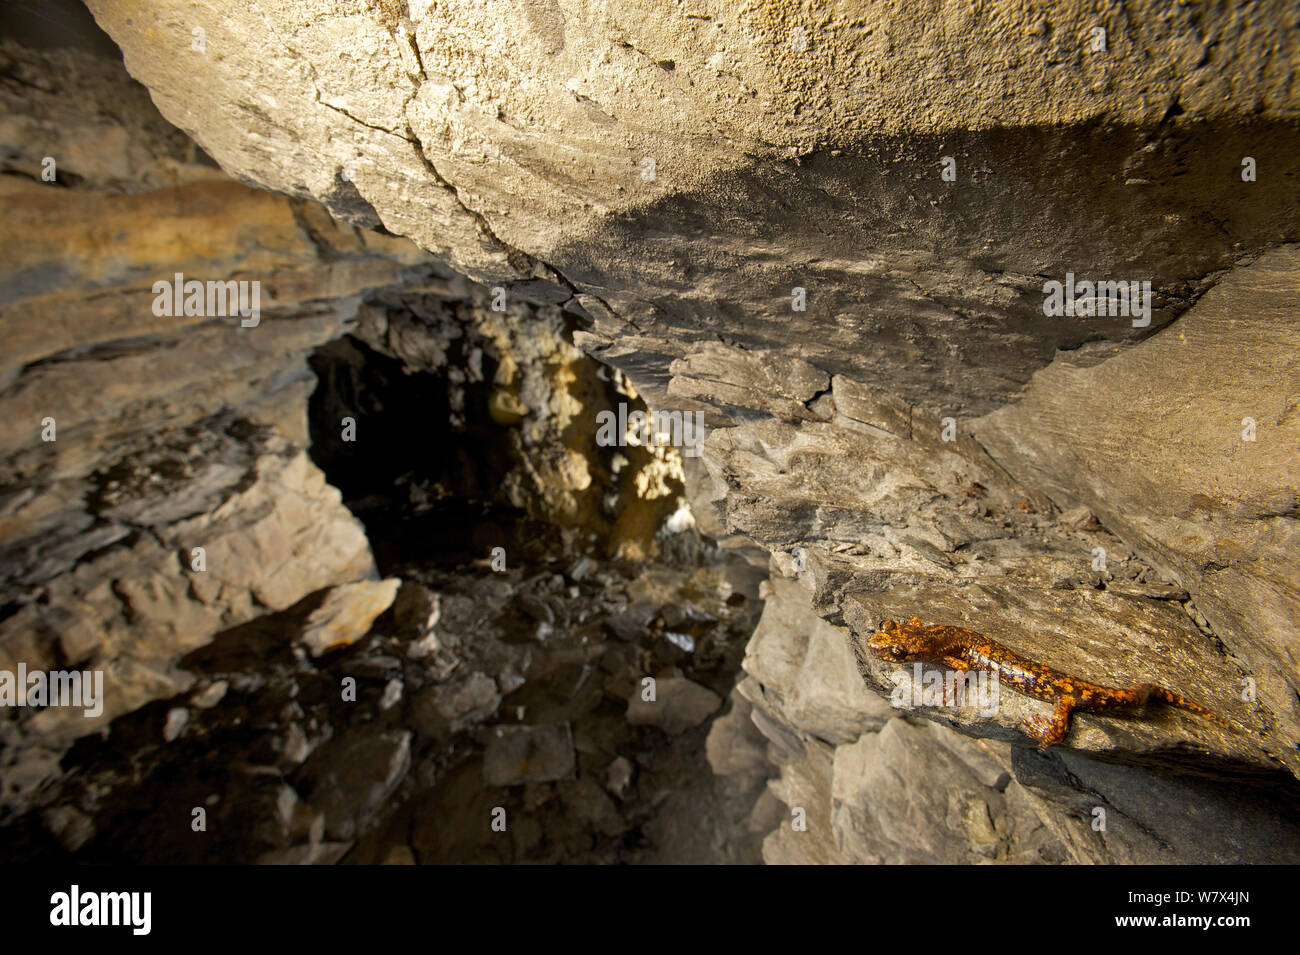 Strinati&#39;s cueva salamandra (Hydromantes strinatii) en su hábitat. Italia. De abril de 2014 Foto de stock